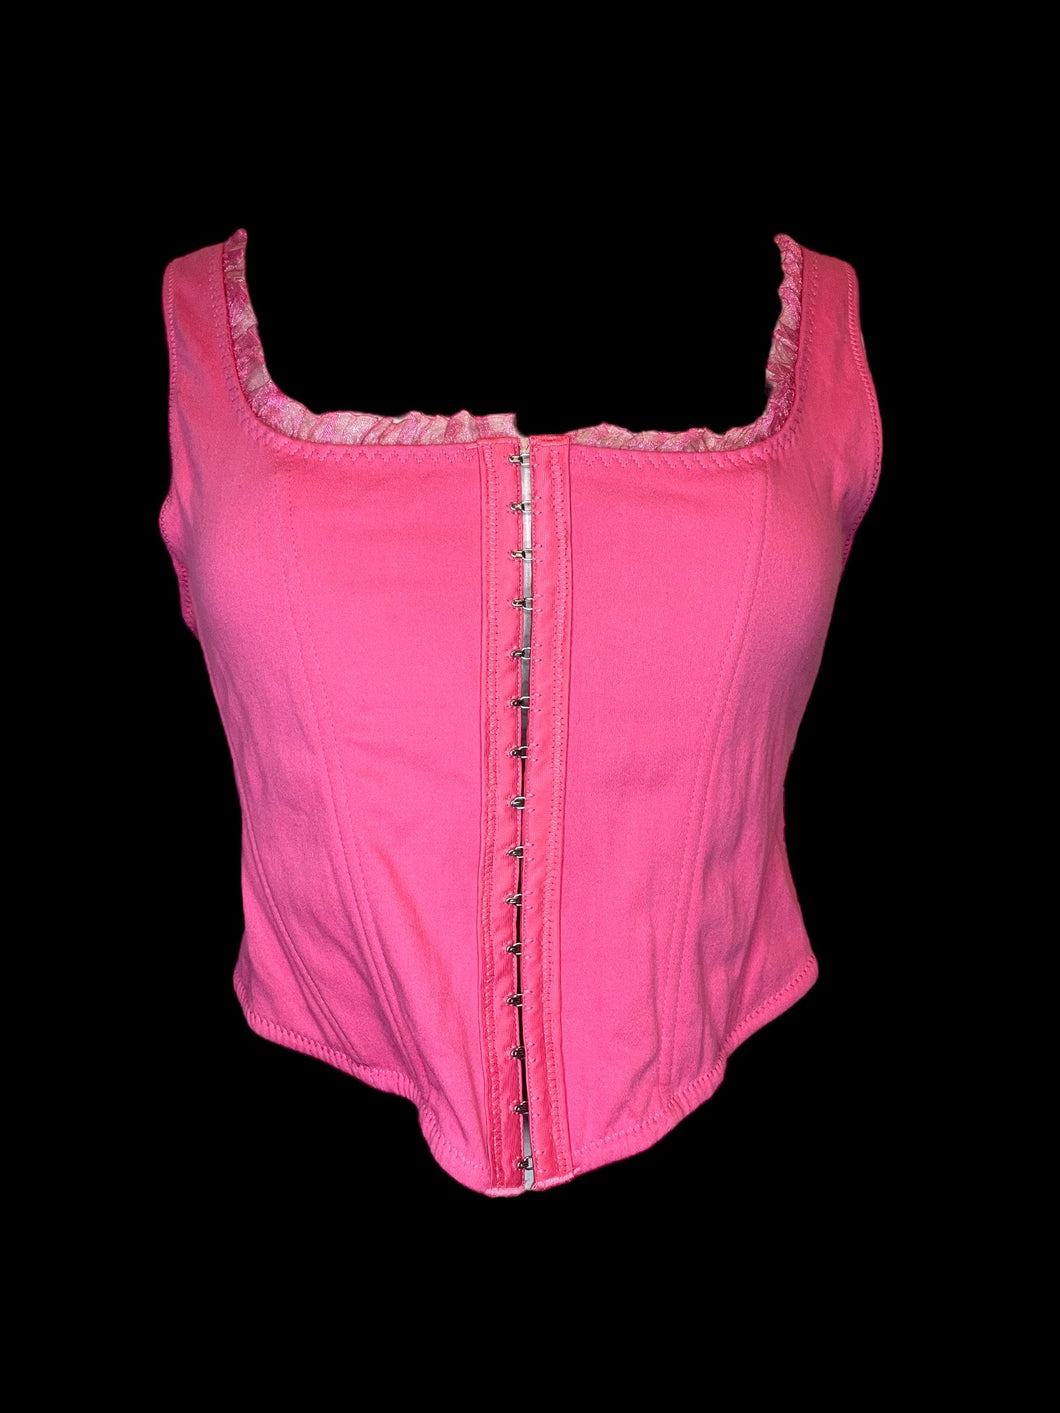 M NWT Hot pink sleeveless bustier w/ ruffle detail, & hook/eye clasp closure